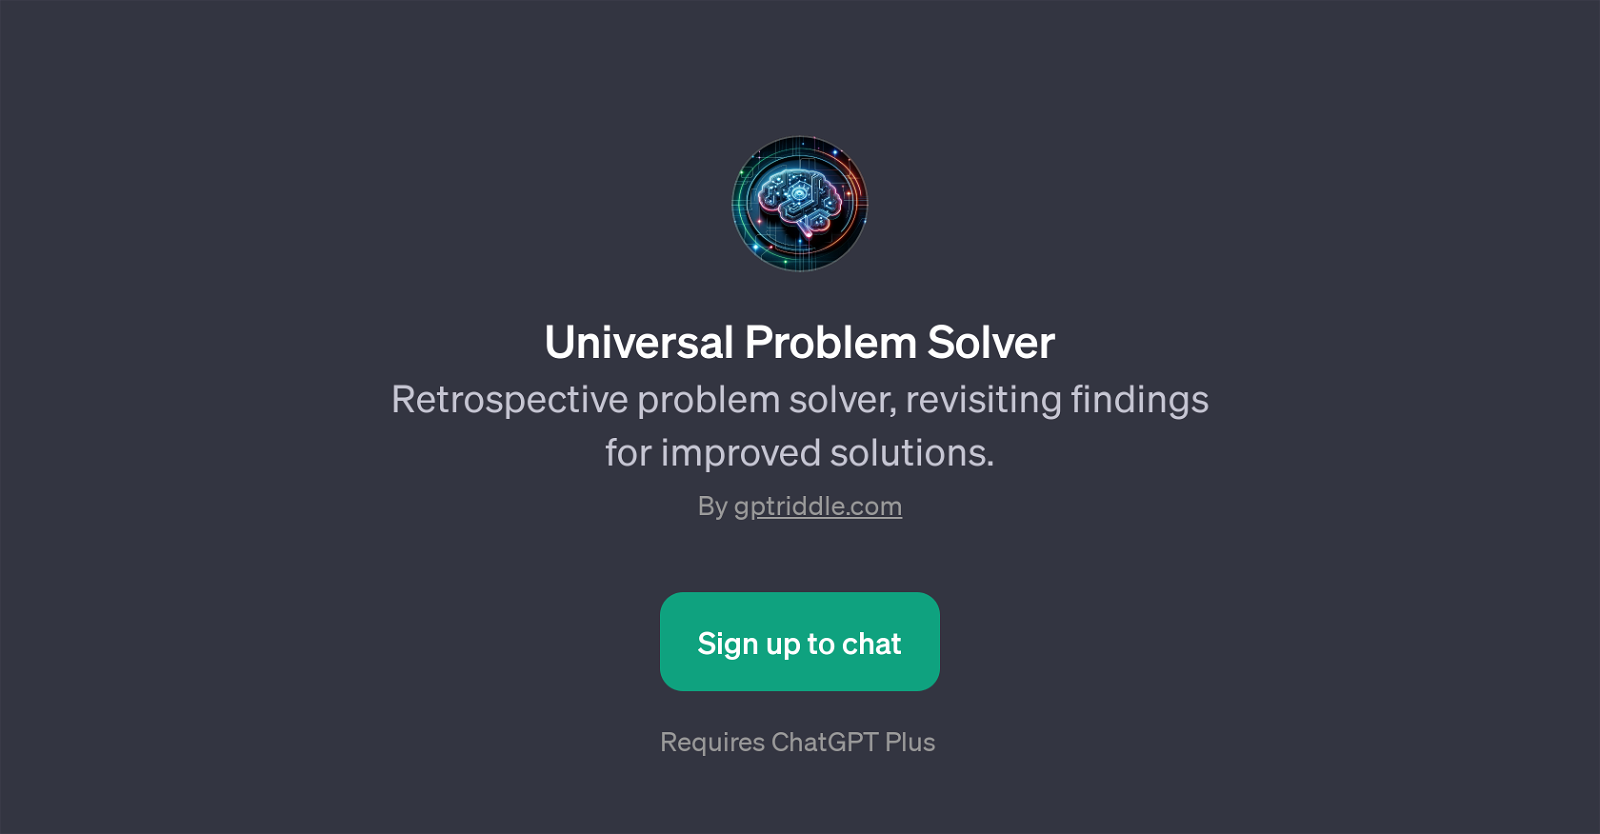 Universal Problem Solver website